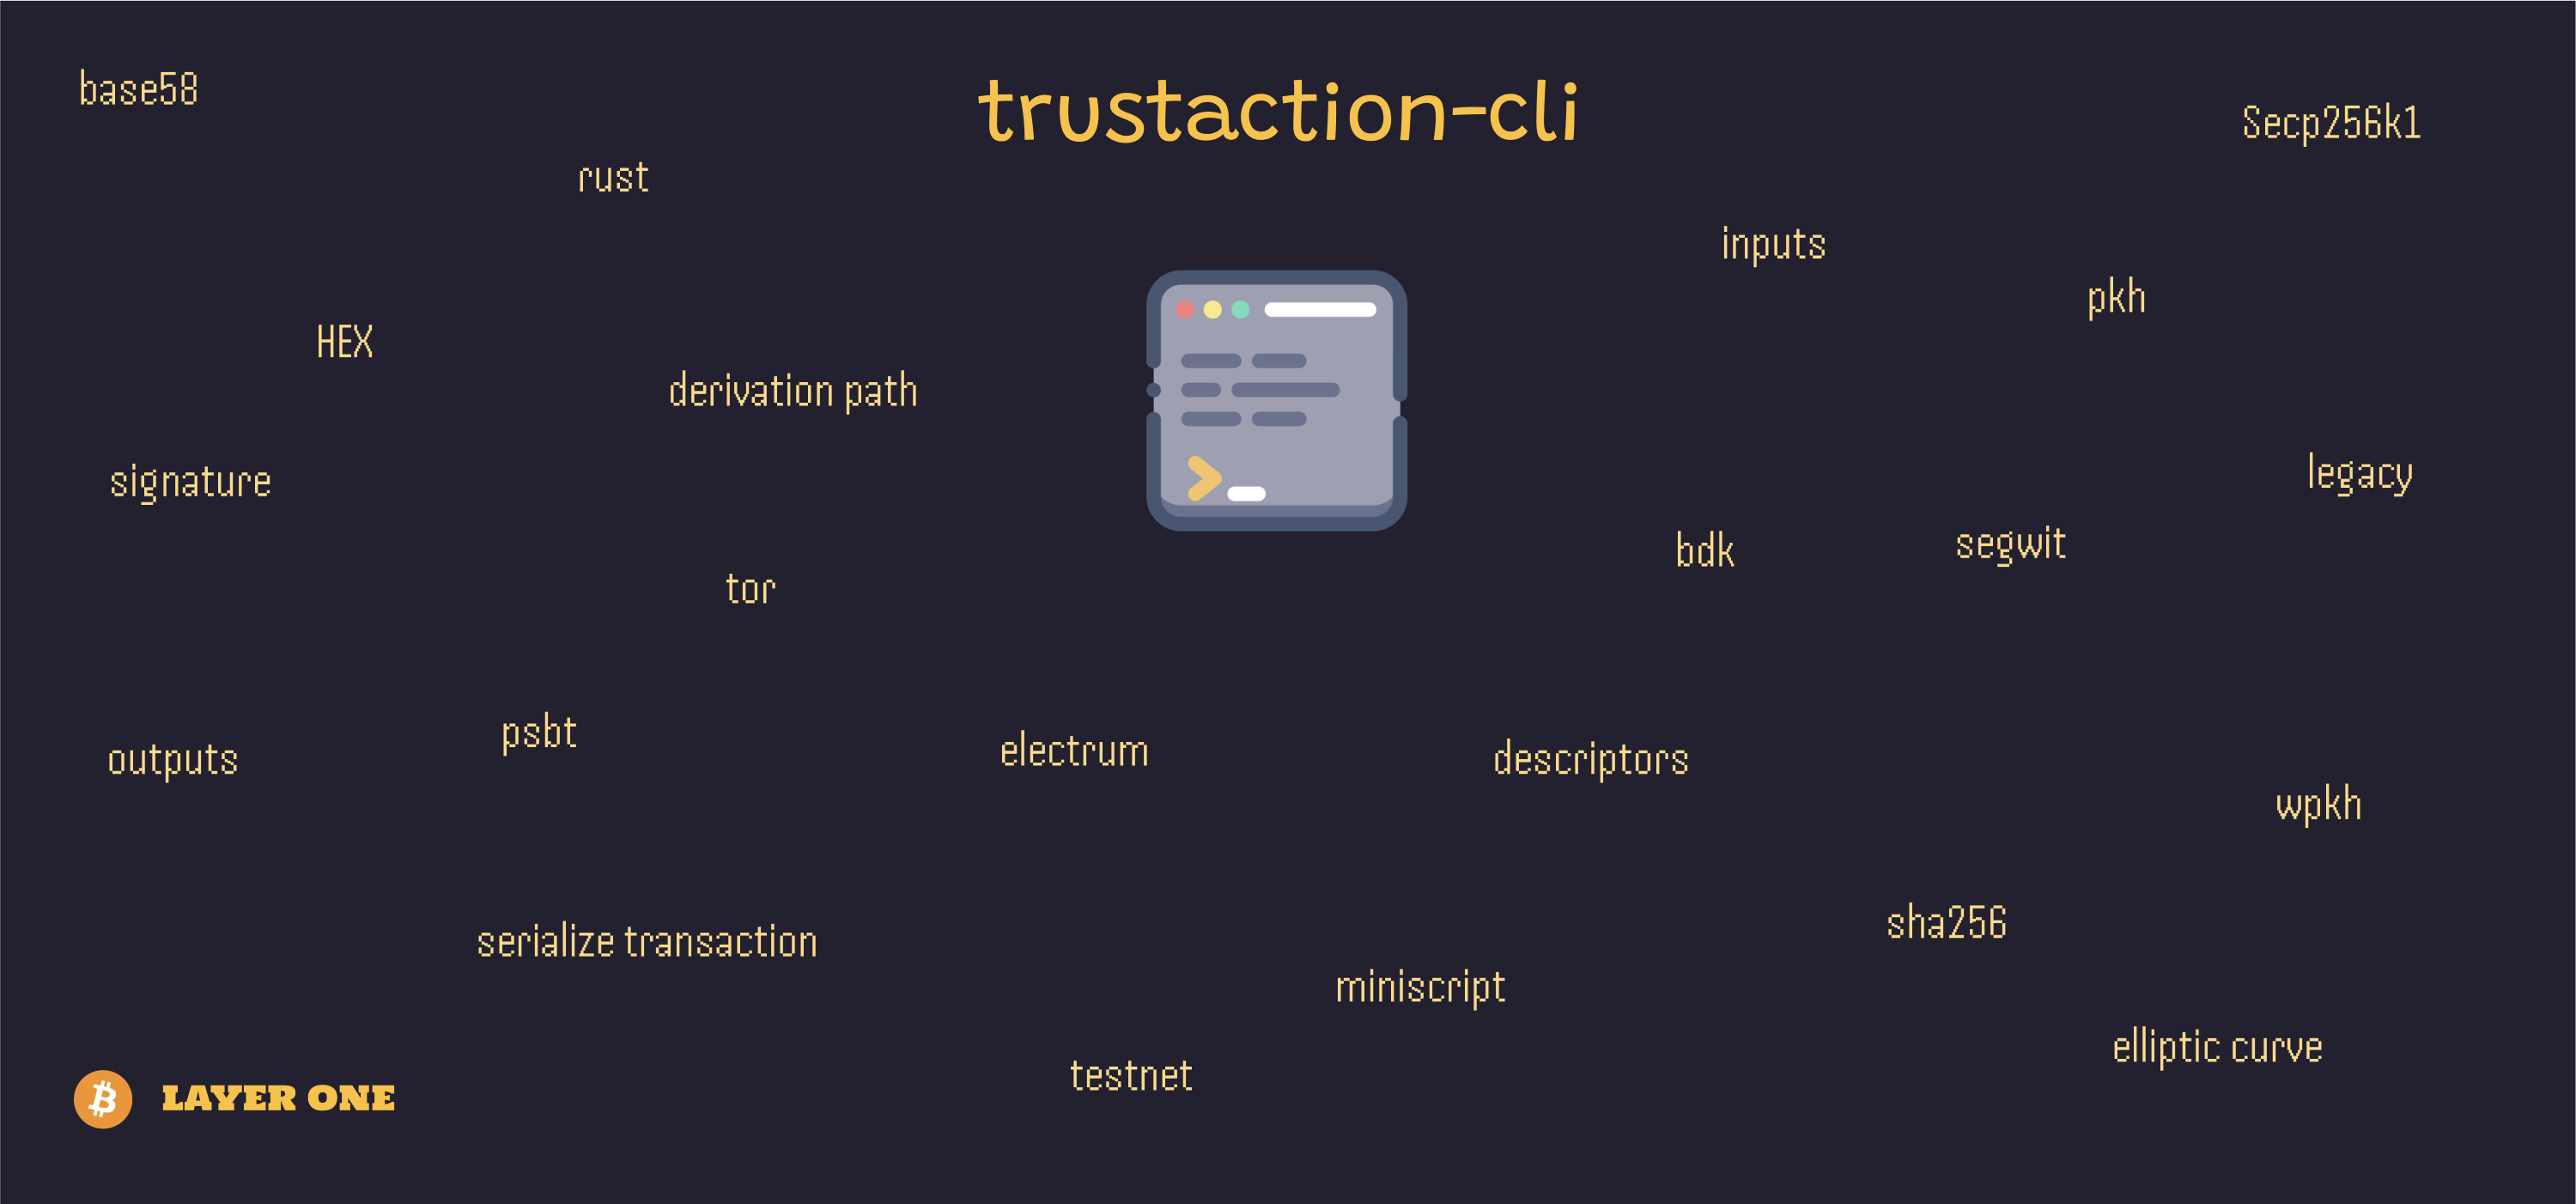 trustaction-cli